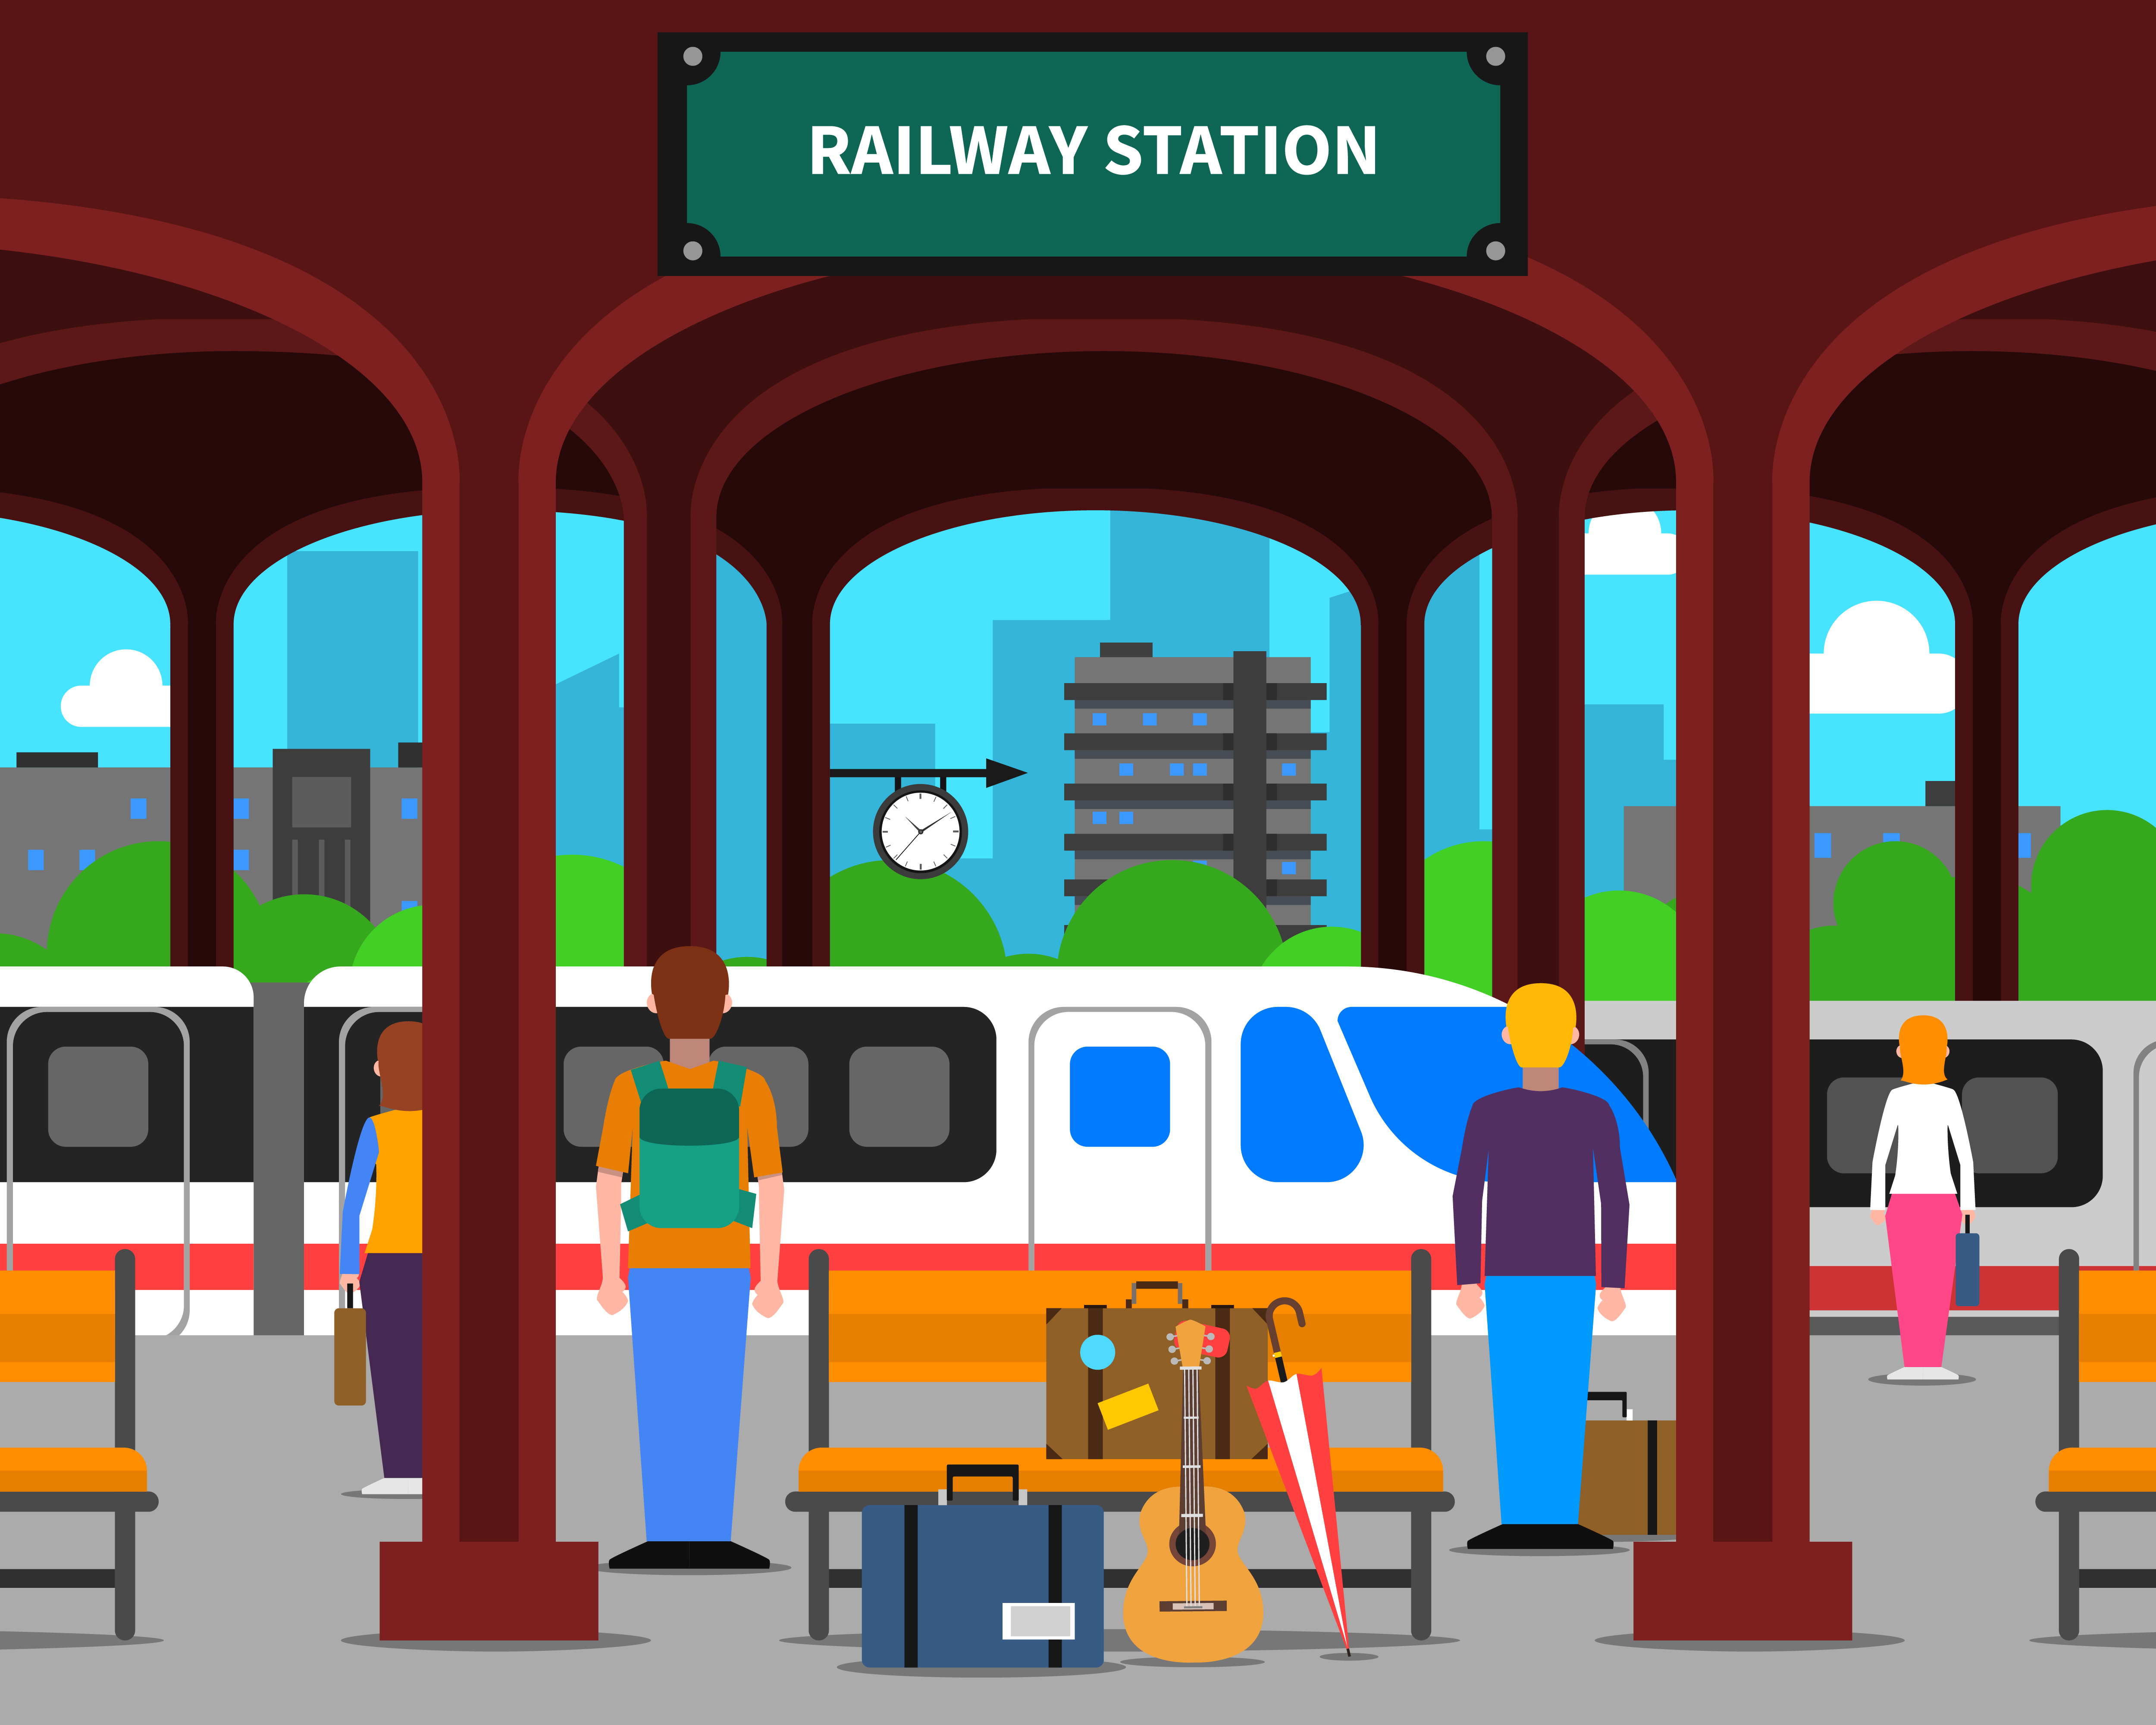 Download the Railway station illustration 479327